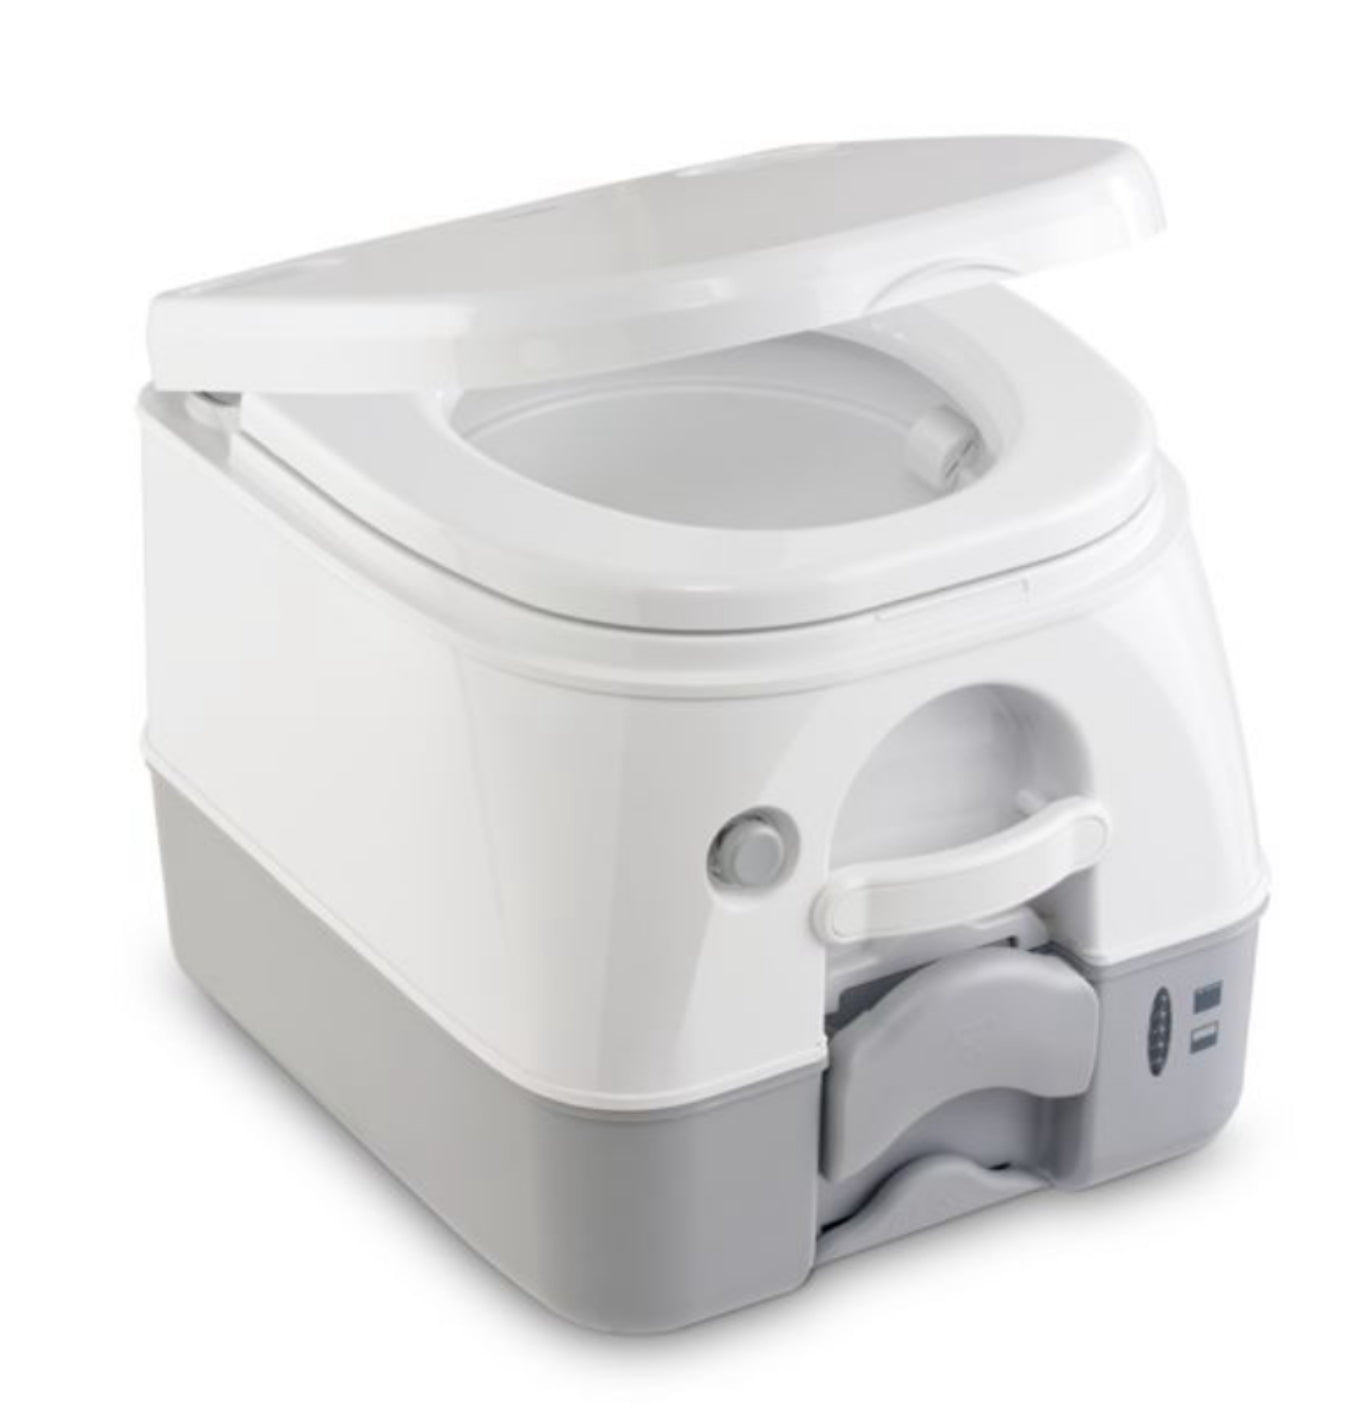 Dometic 972G Portable Toilet & GreenCare Eco Friendly Tabs Bundle Image